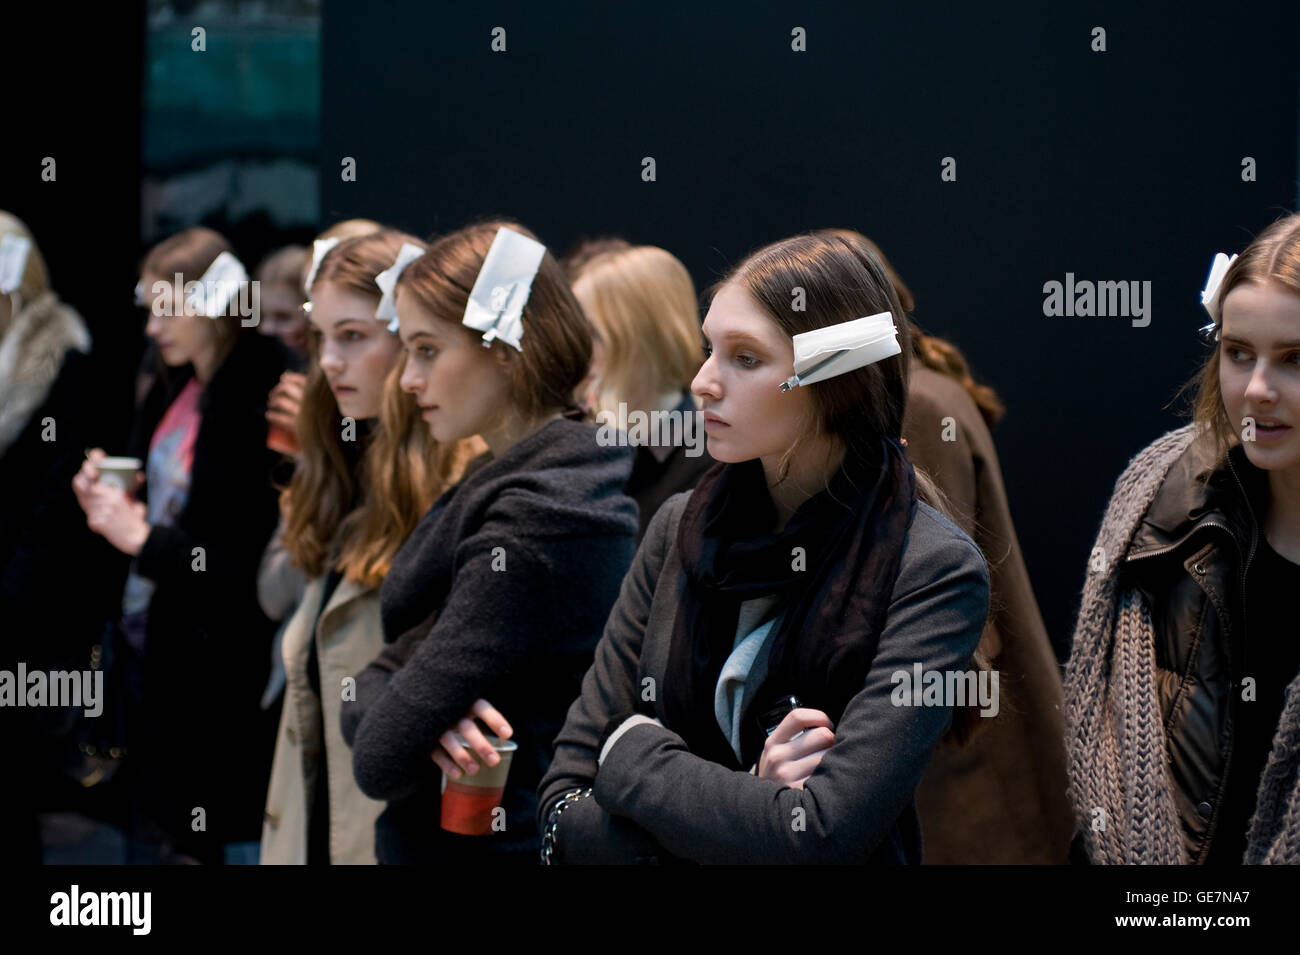 fashion models  backstage at London fashion week Stock Photo